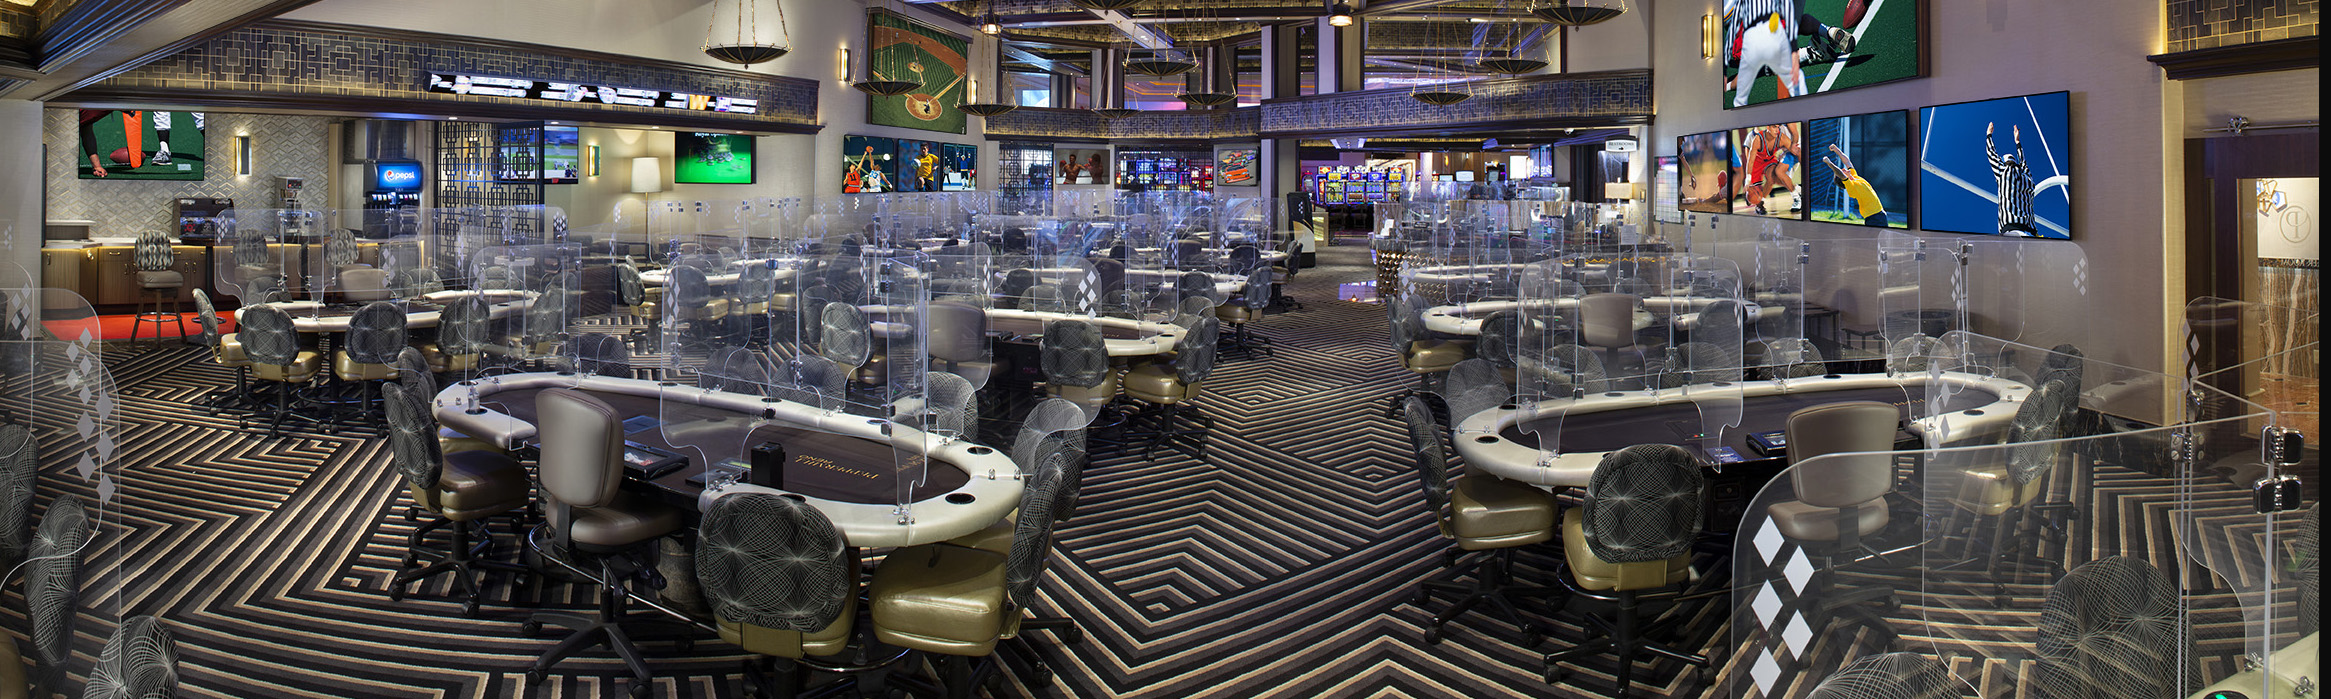 private poker room turning stone casino